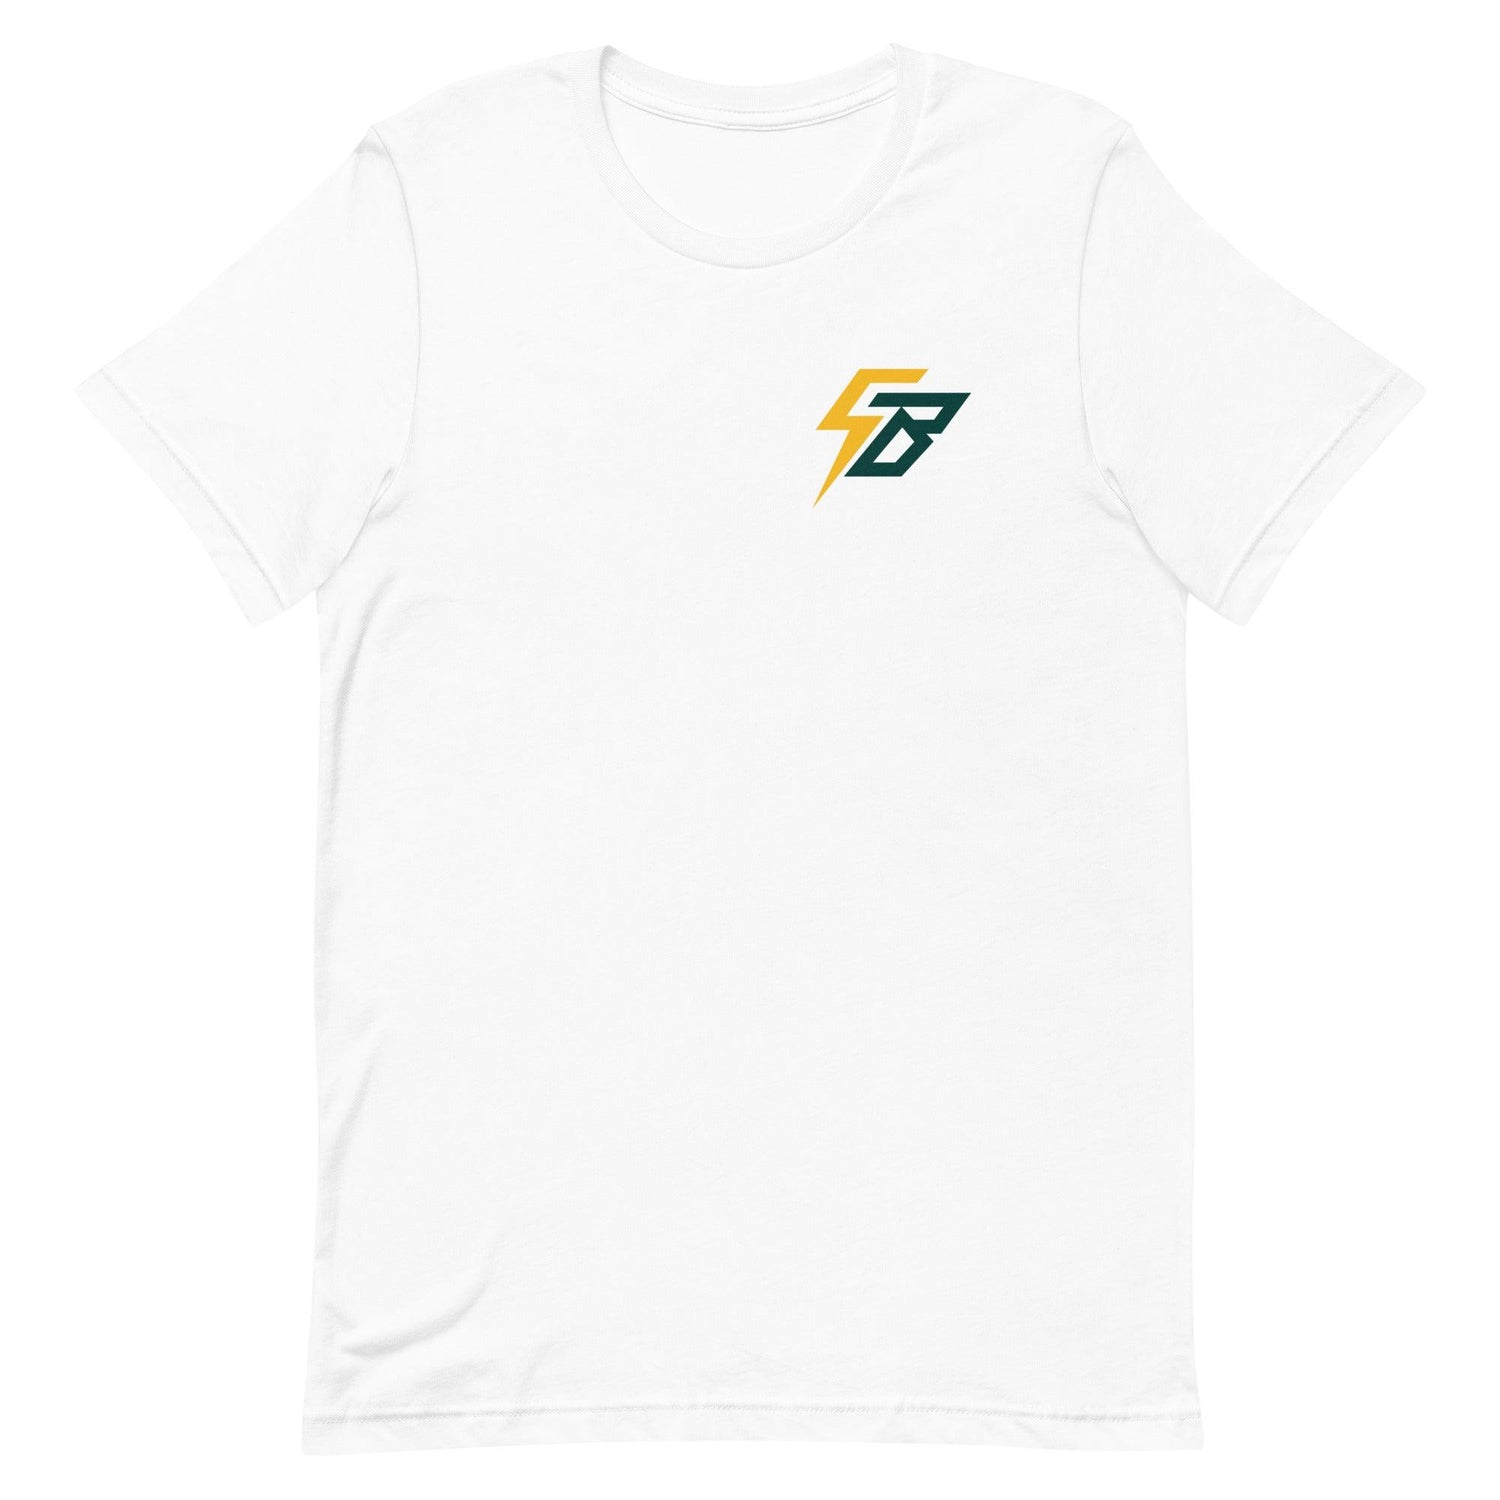 Skye Bolt "Electric" t-shirt - Fan Arch